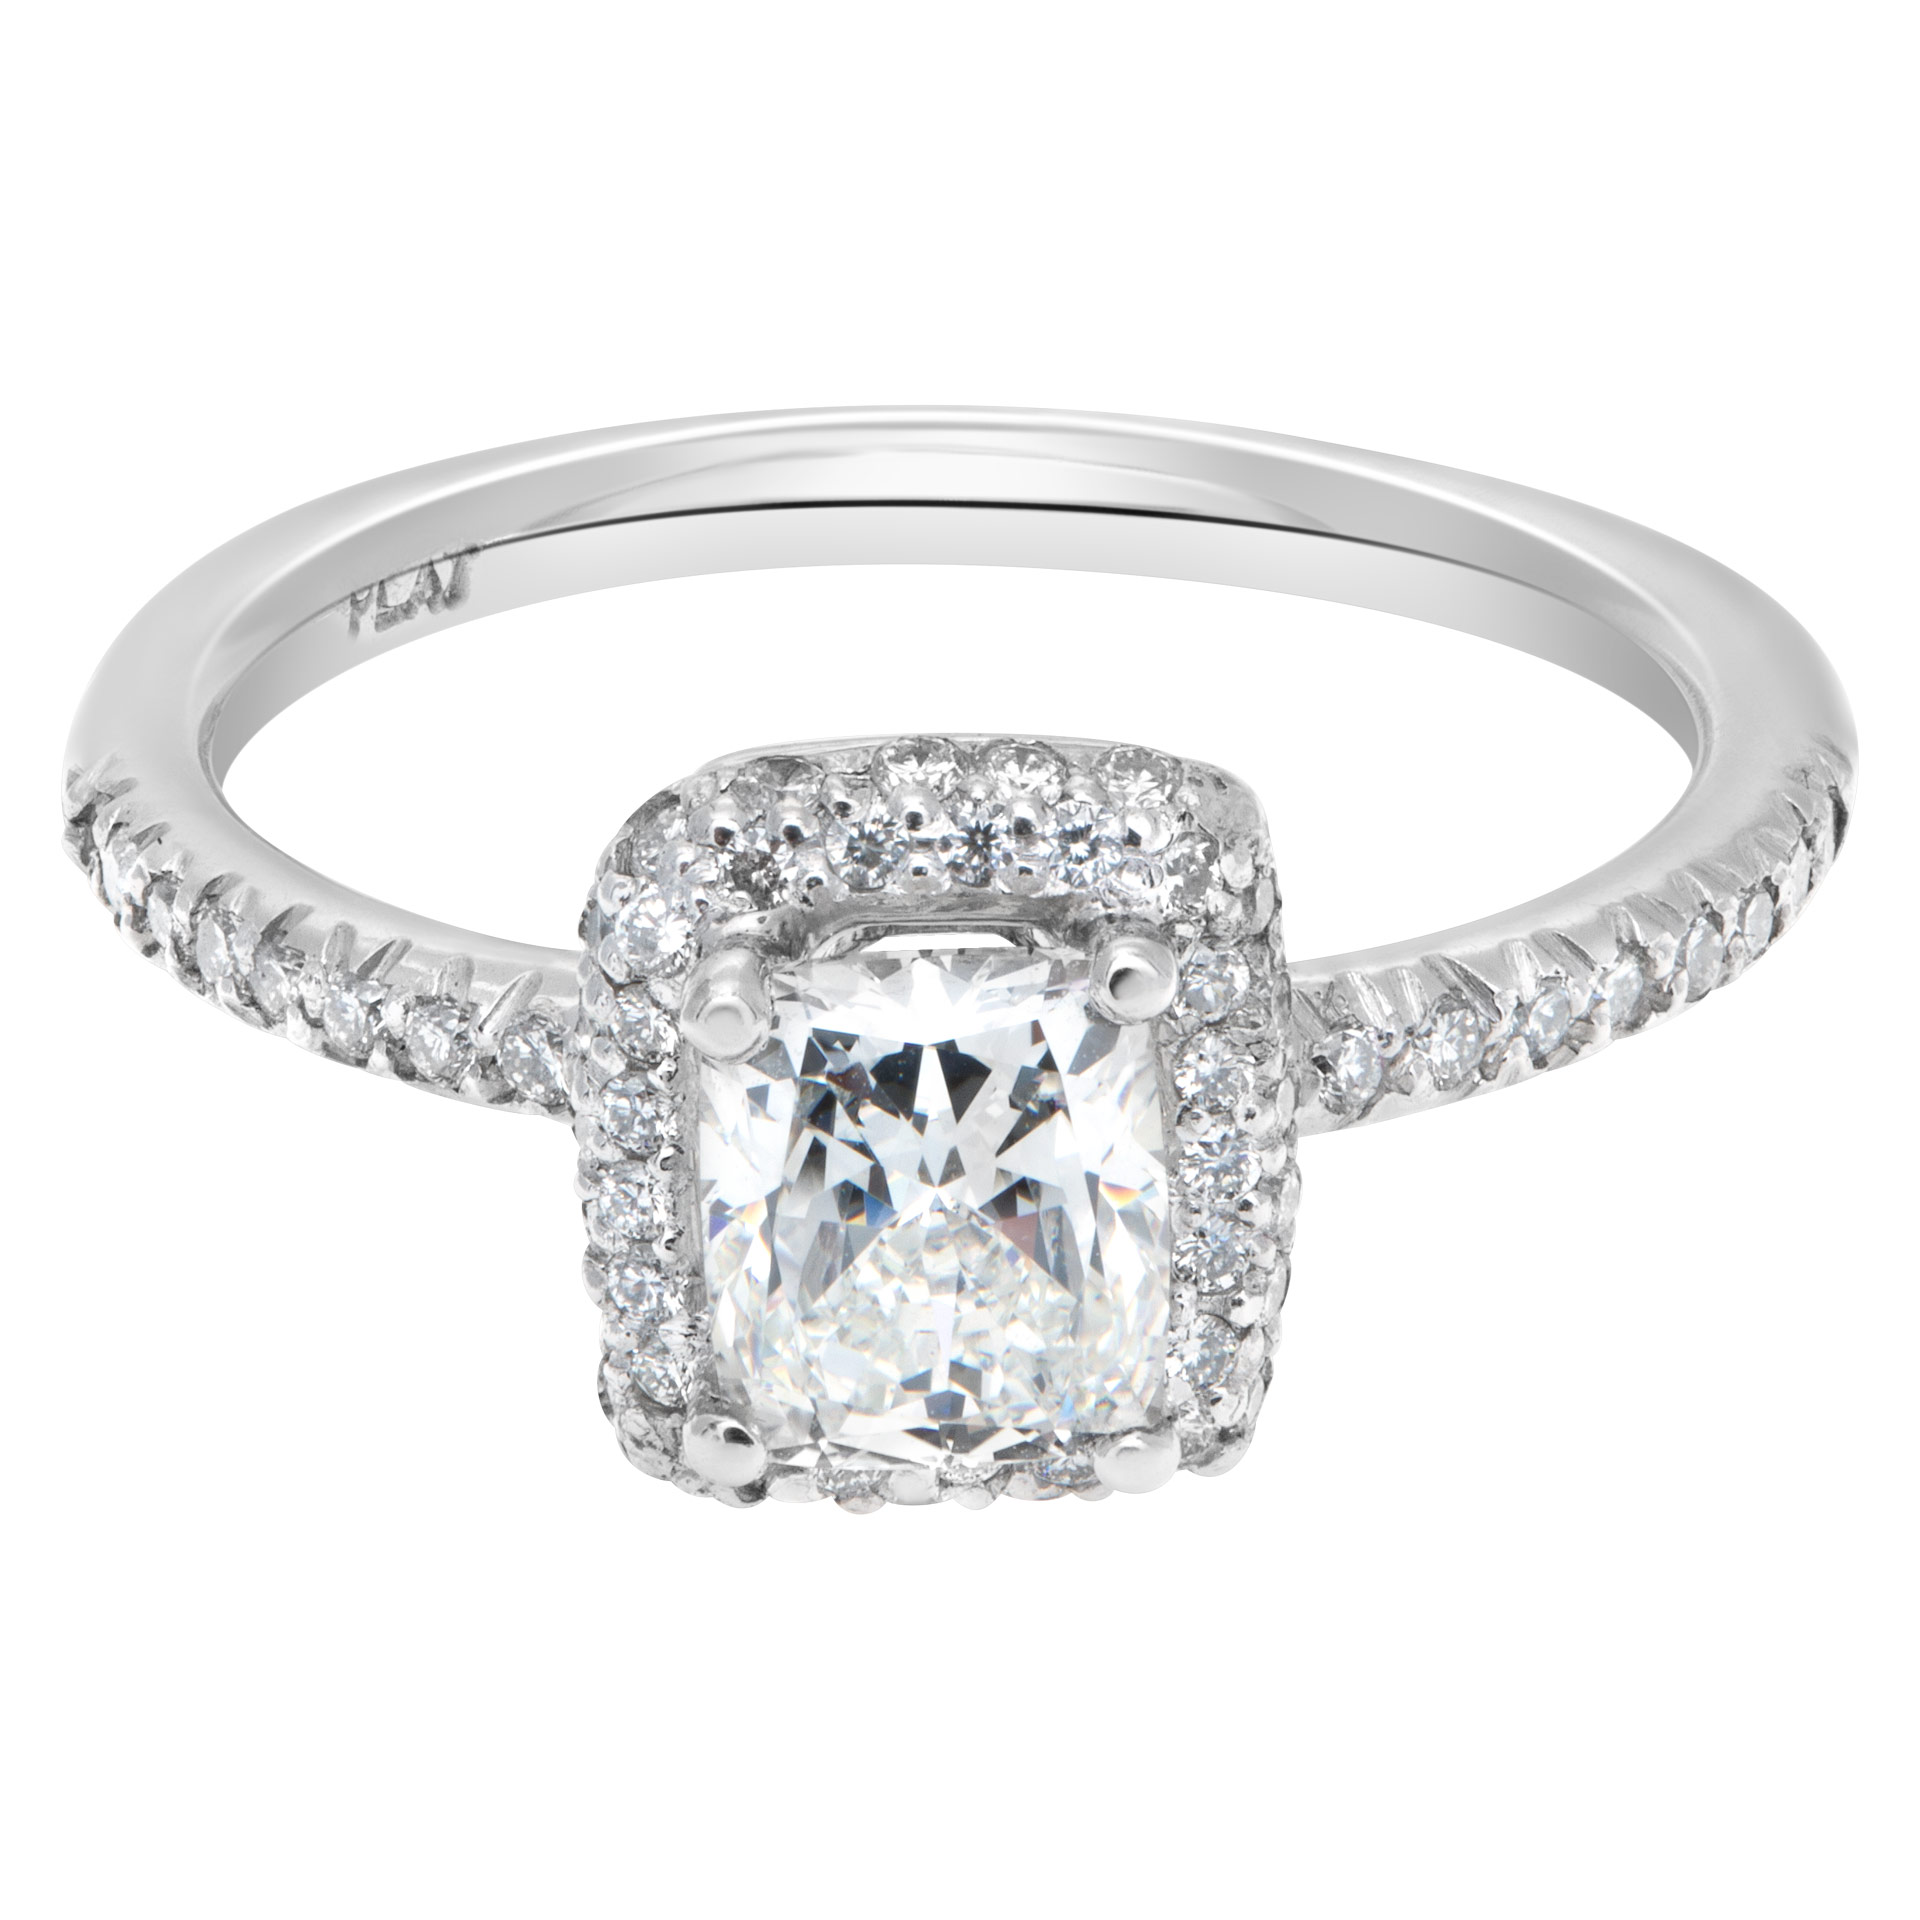 GIA certified rectangular modified cut 1.01 carat diamond (G color , VS1 clarity) ring